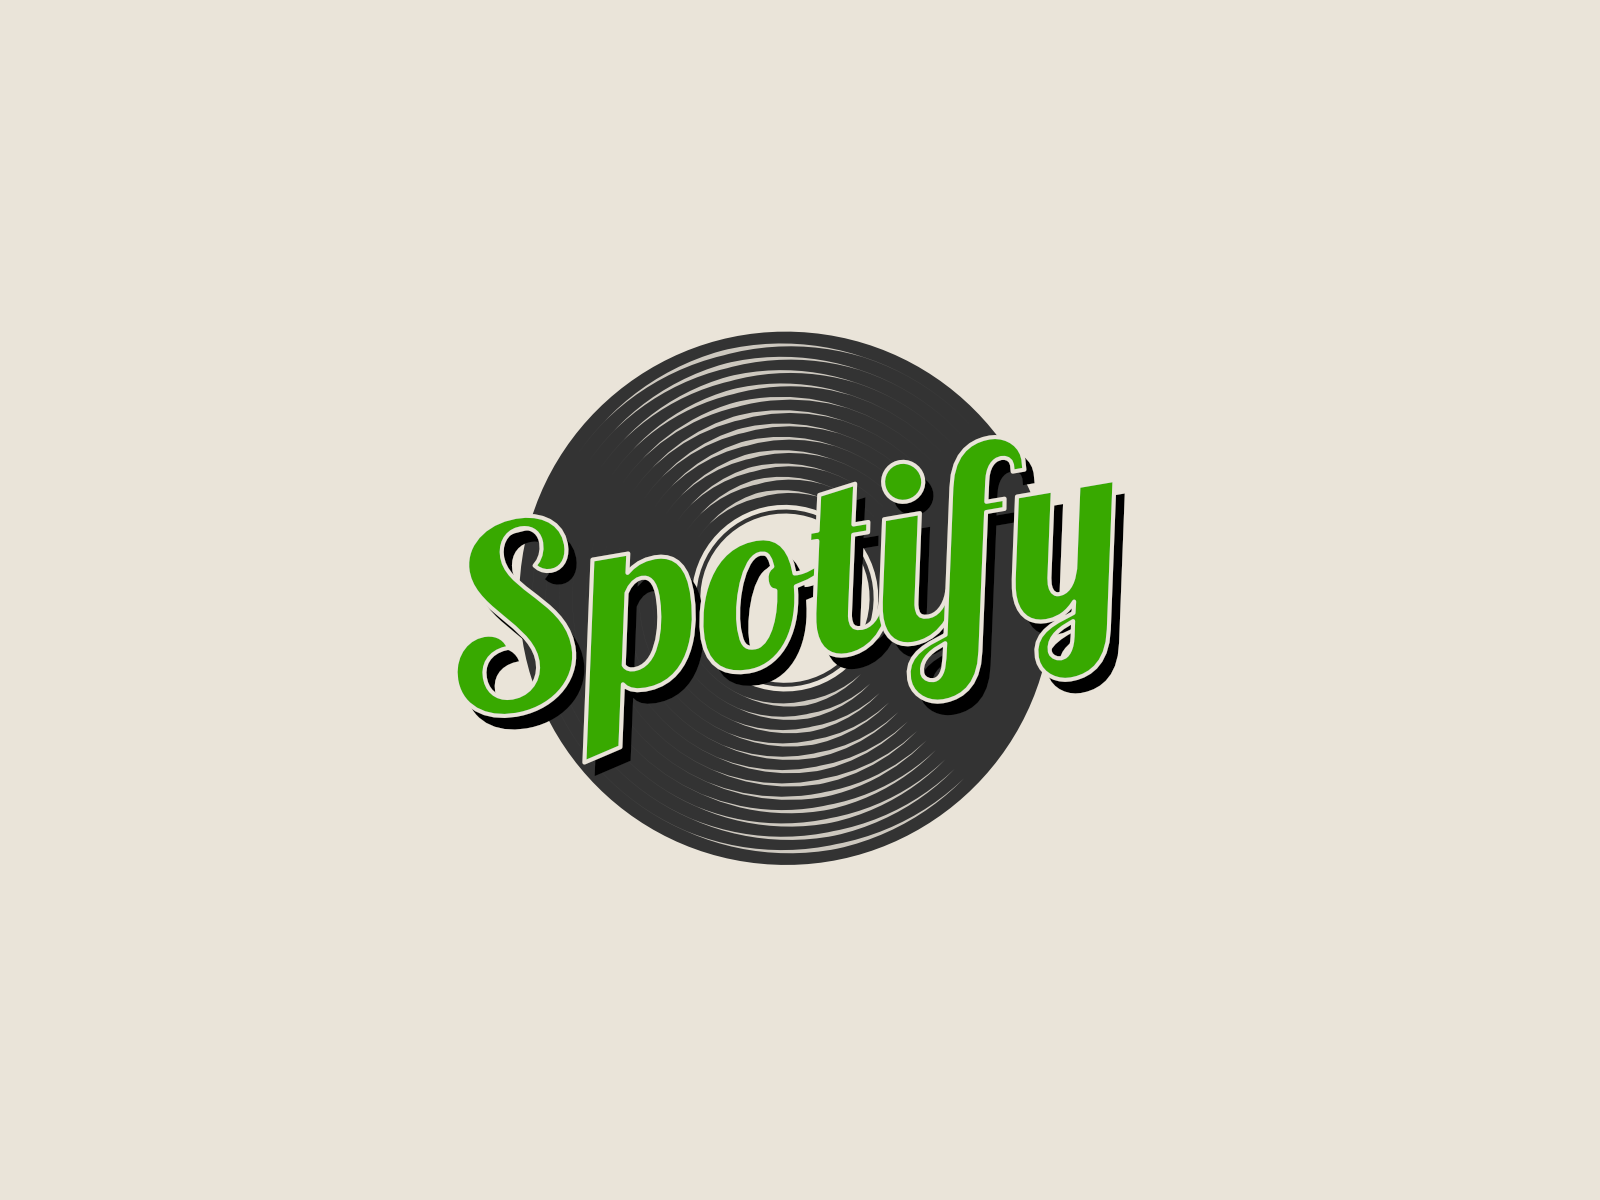 Spotify Logo Retro Style by Dominic Wettstein on Dribbble